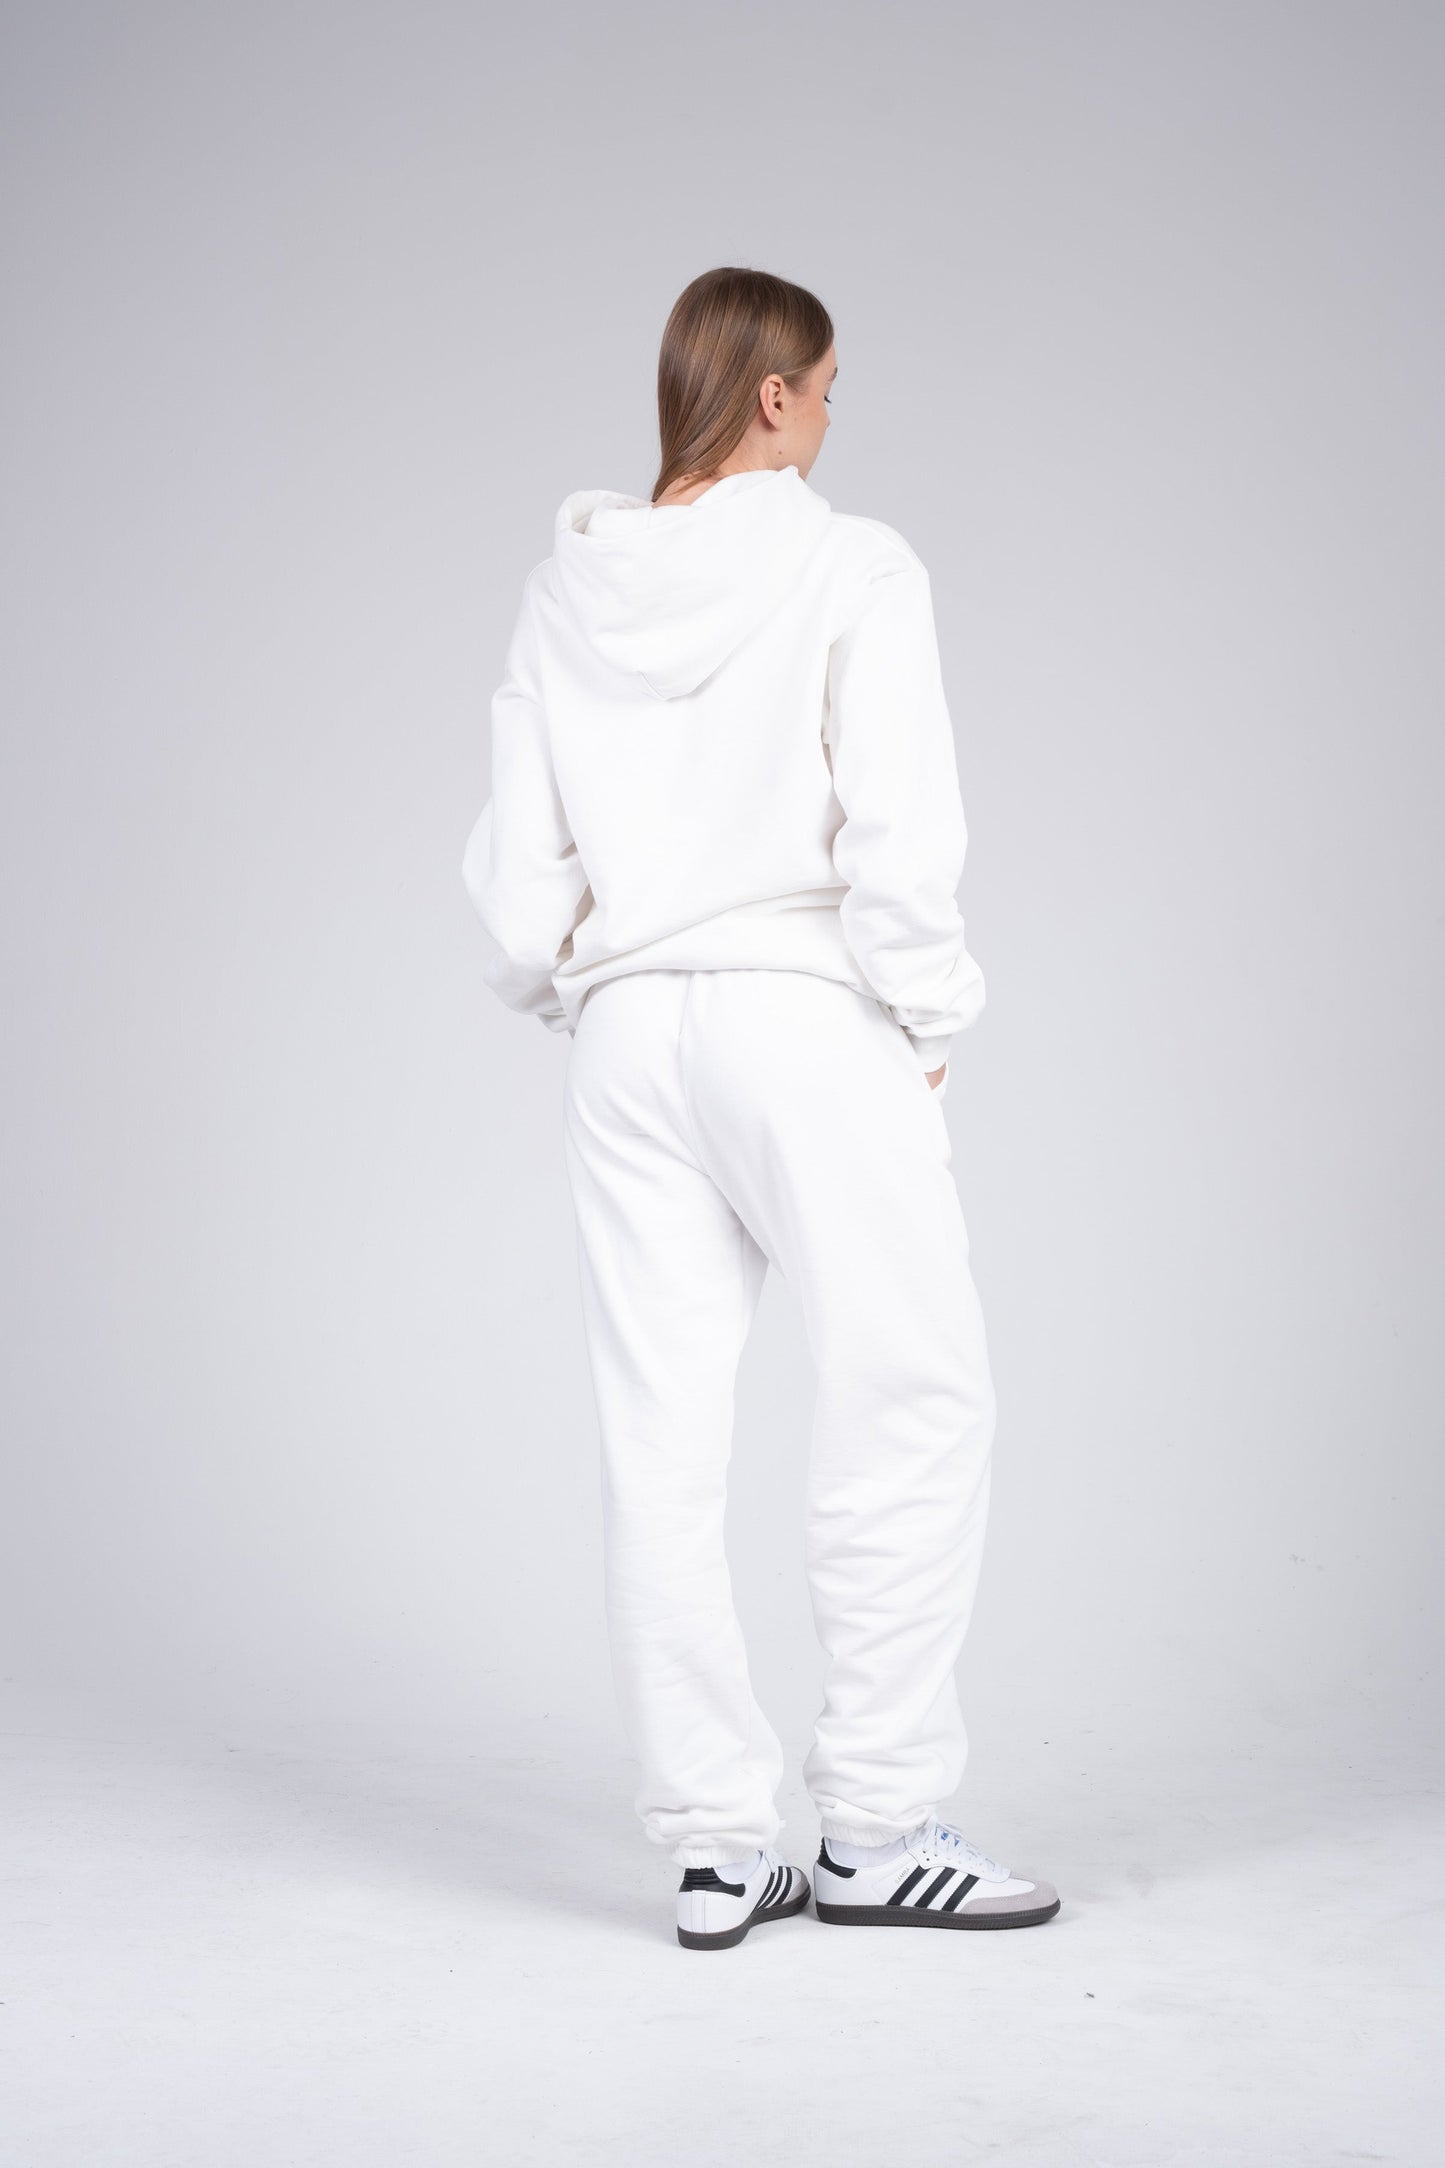 Sweatsuit in white